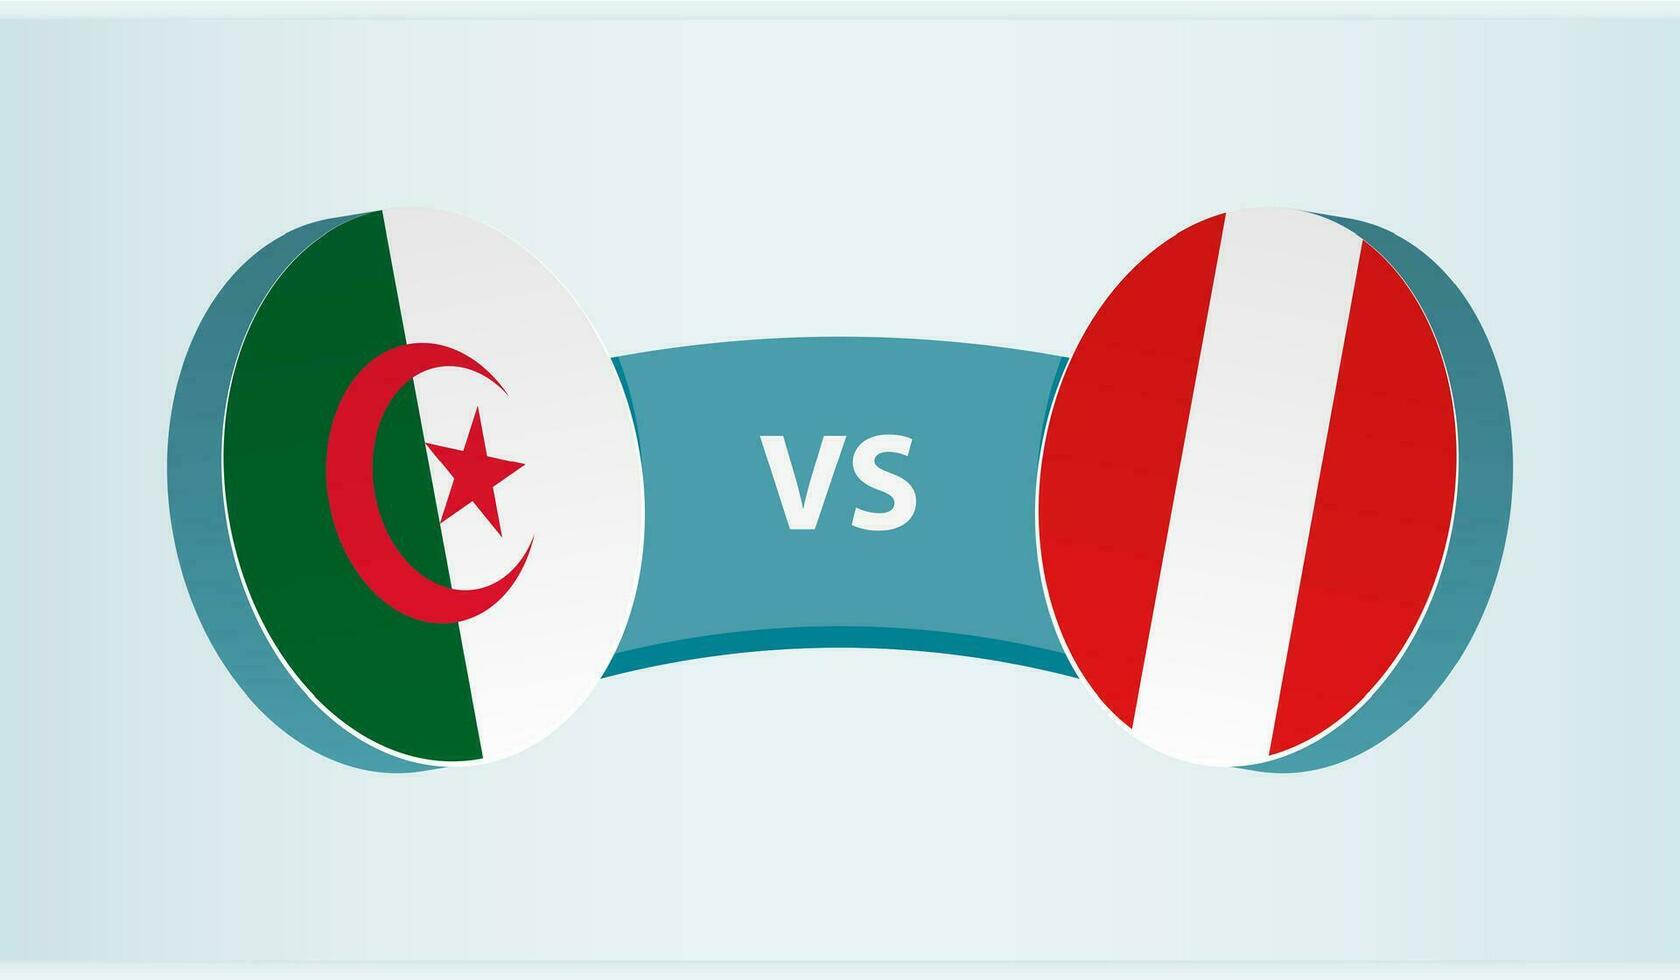 Algeria versus Peru, team sports competition concept. vector